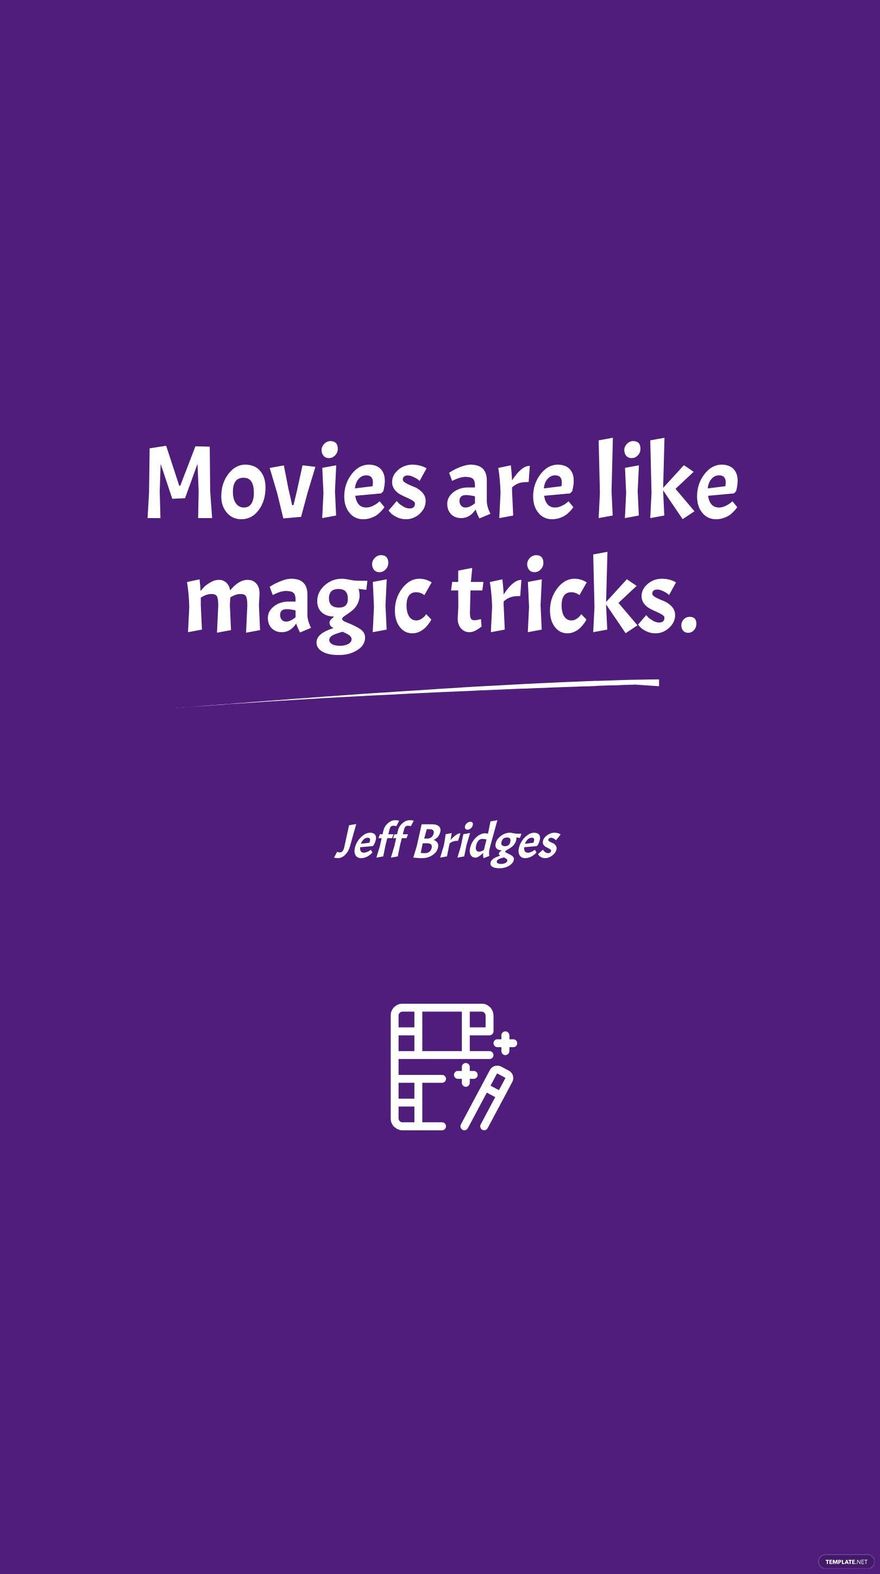 Jeff Bridges - Movies are like magic tricks.